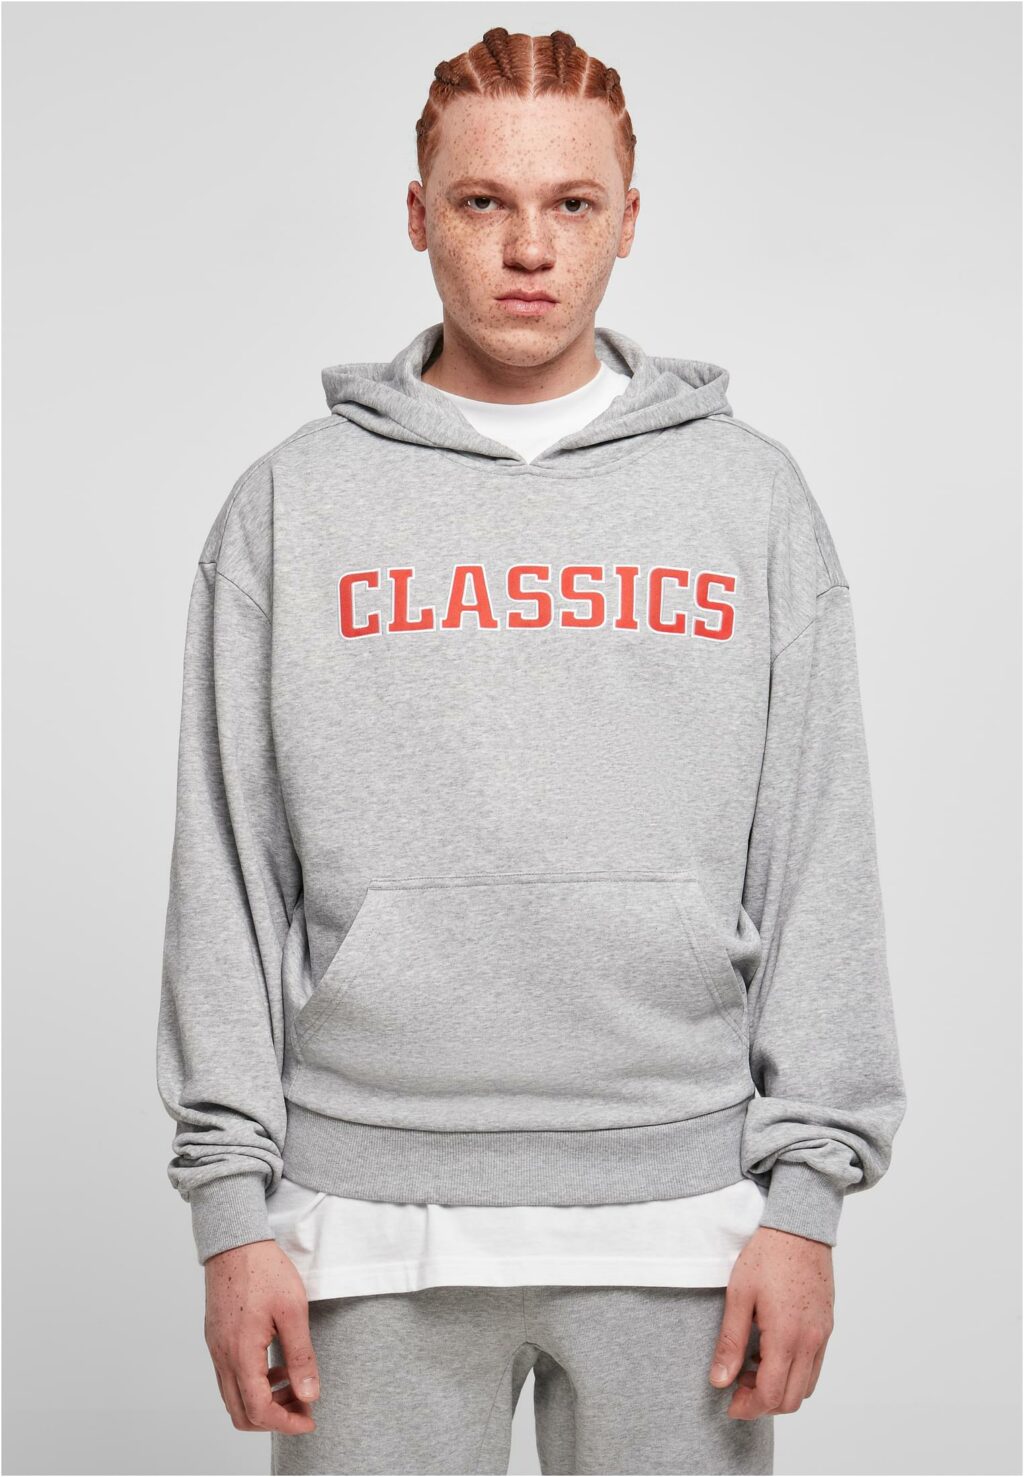 Urban Classics Classics College Hoody grey TB5934